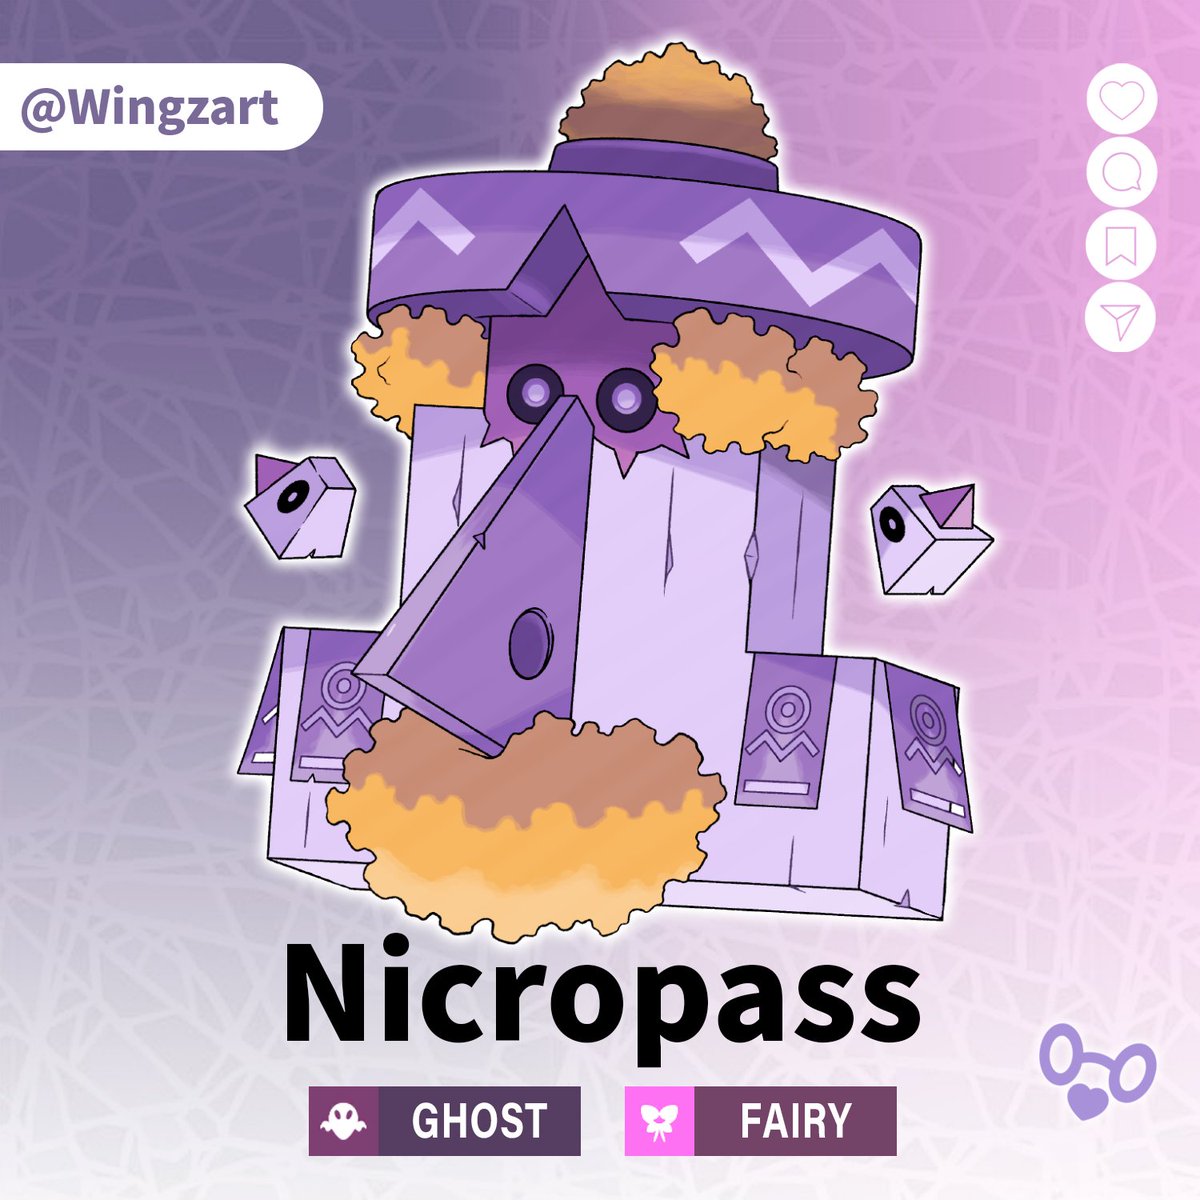 Nicropass (Necromanter + Compass)
Type: Ghost/Fairy 

It is inspired by Ofrenda, Altar de Día de Muertos and Ouija. It will appear on Pokémon Meteor, the fangame of @EBaruON

#PokemonMeteor #fakemon #pokemon #pokemonleaks #inktober  #ポケモン